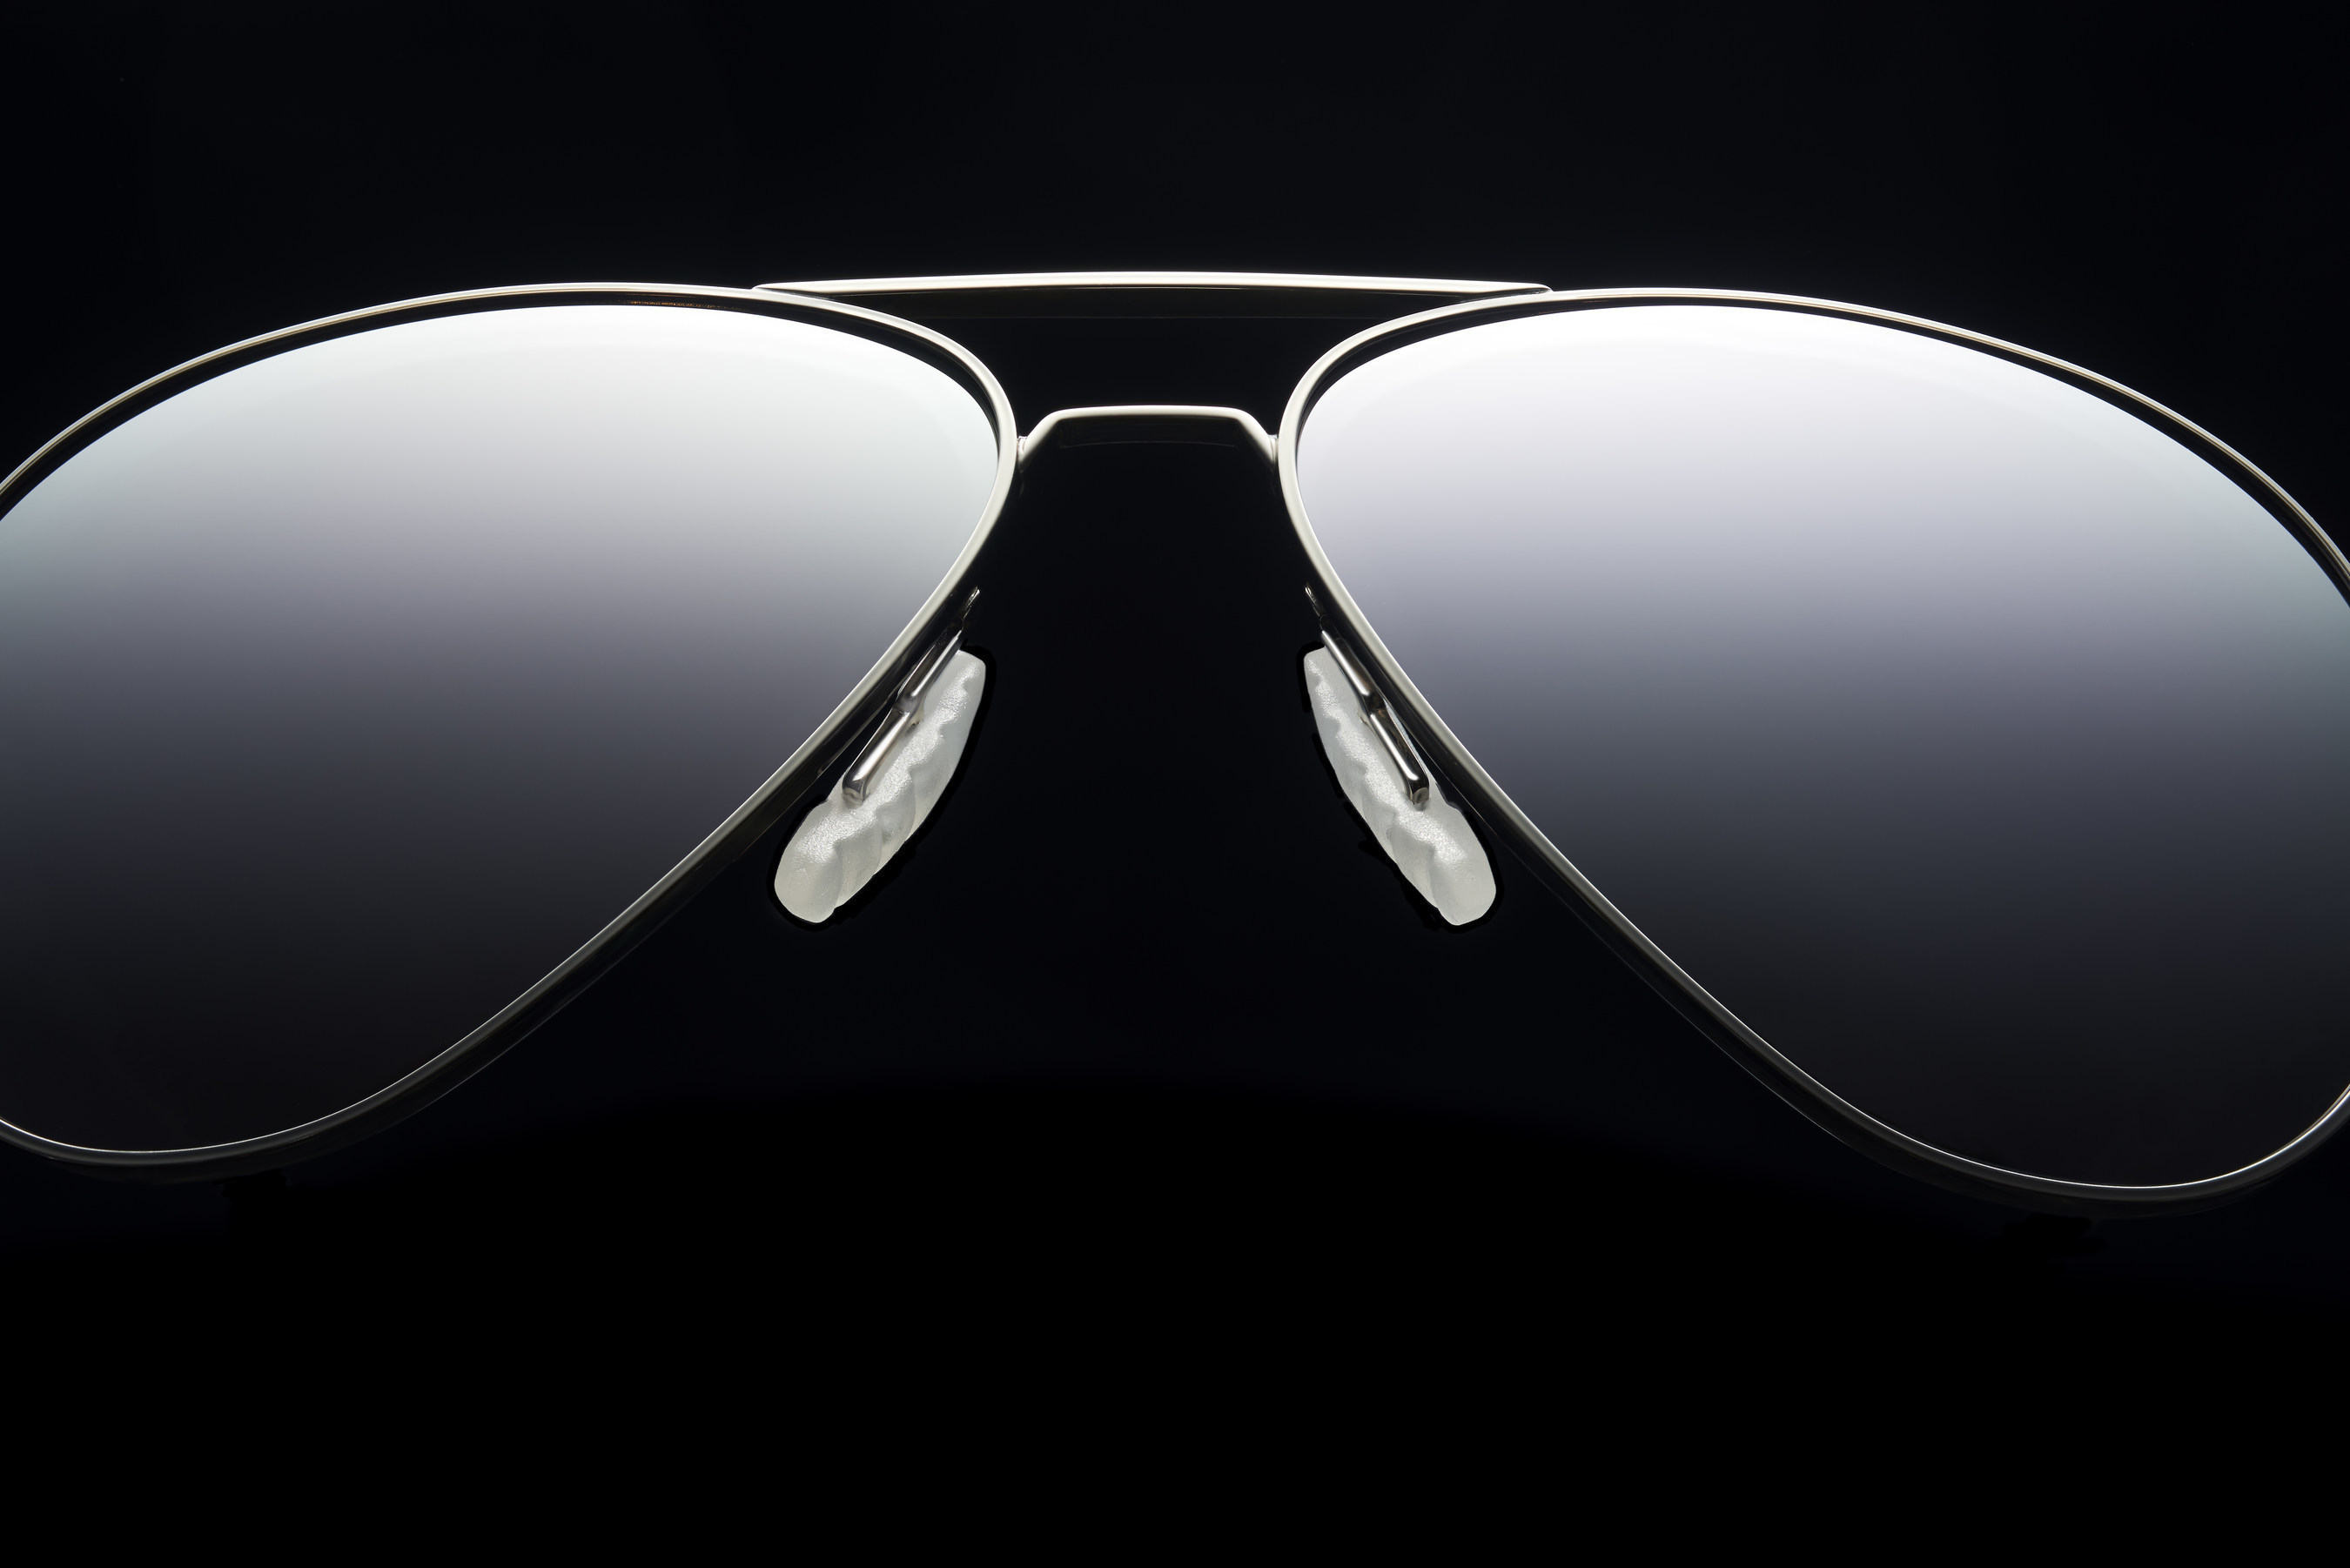 ROKA Phantom sunglasses